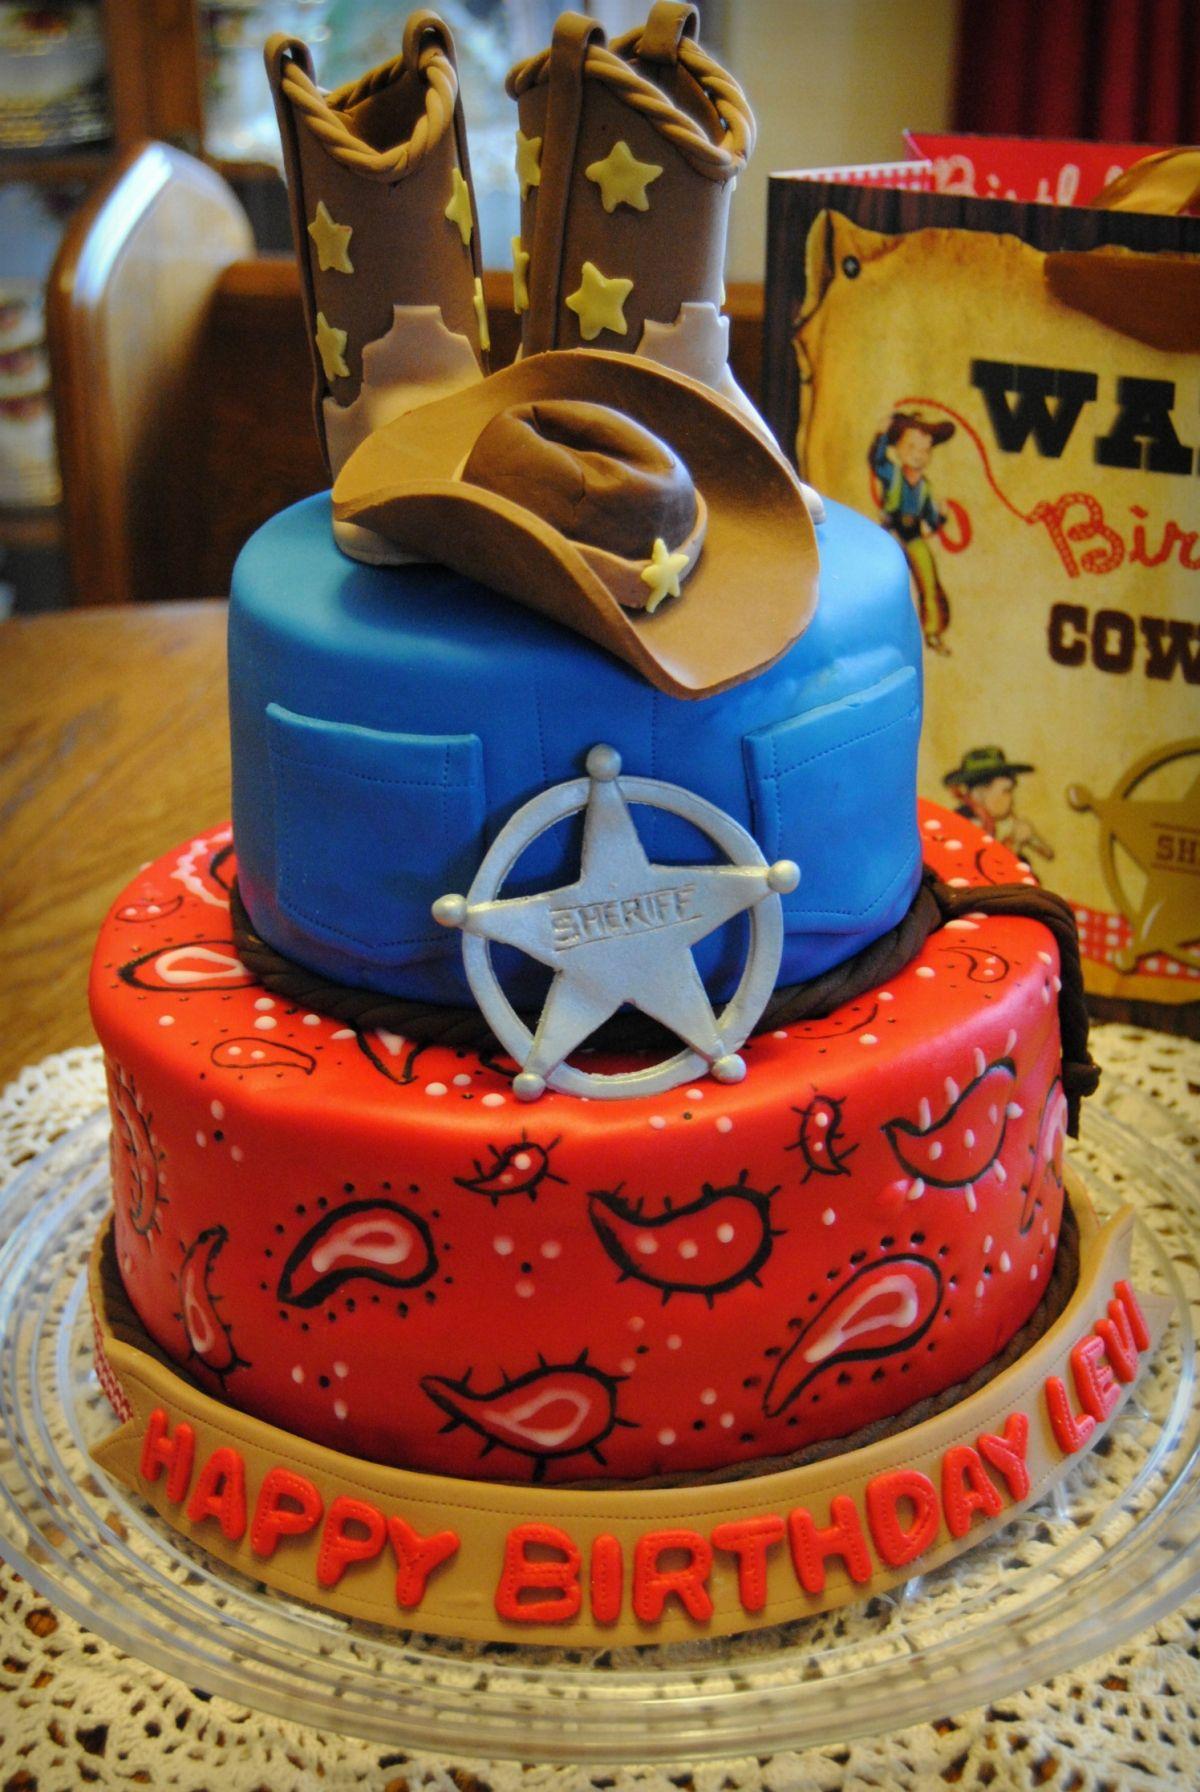 Cowboy Cakes